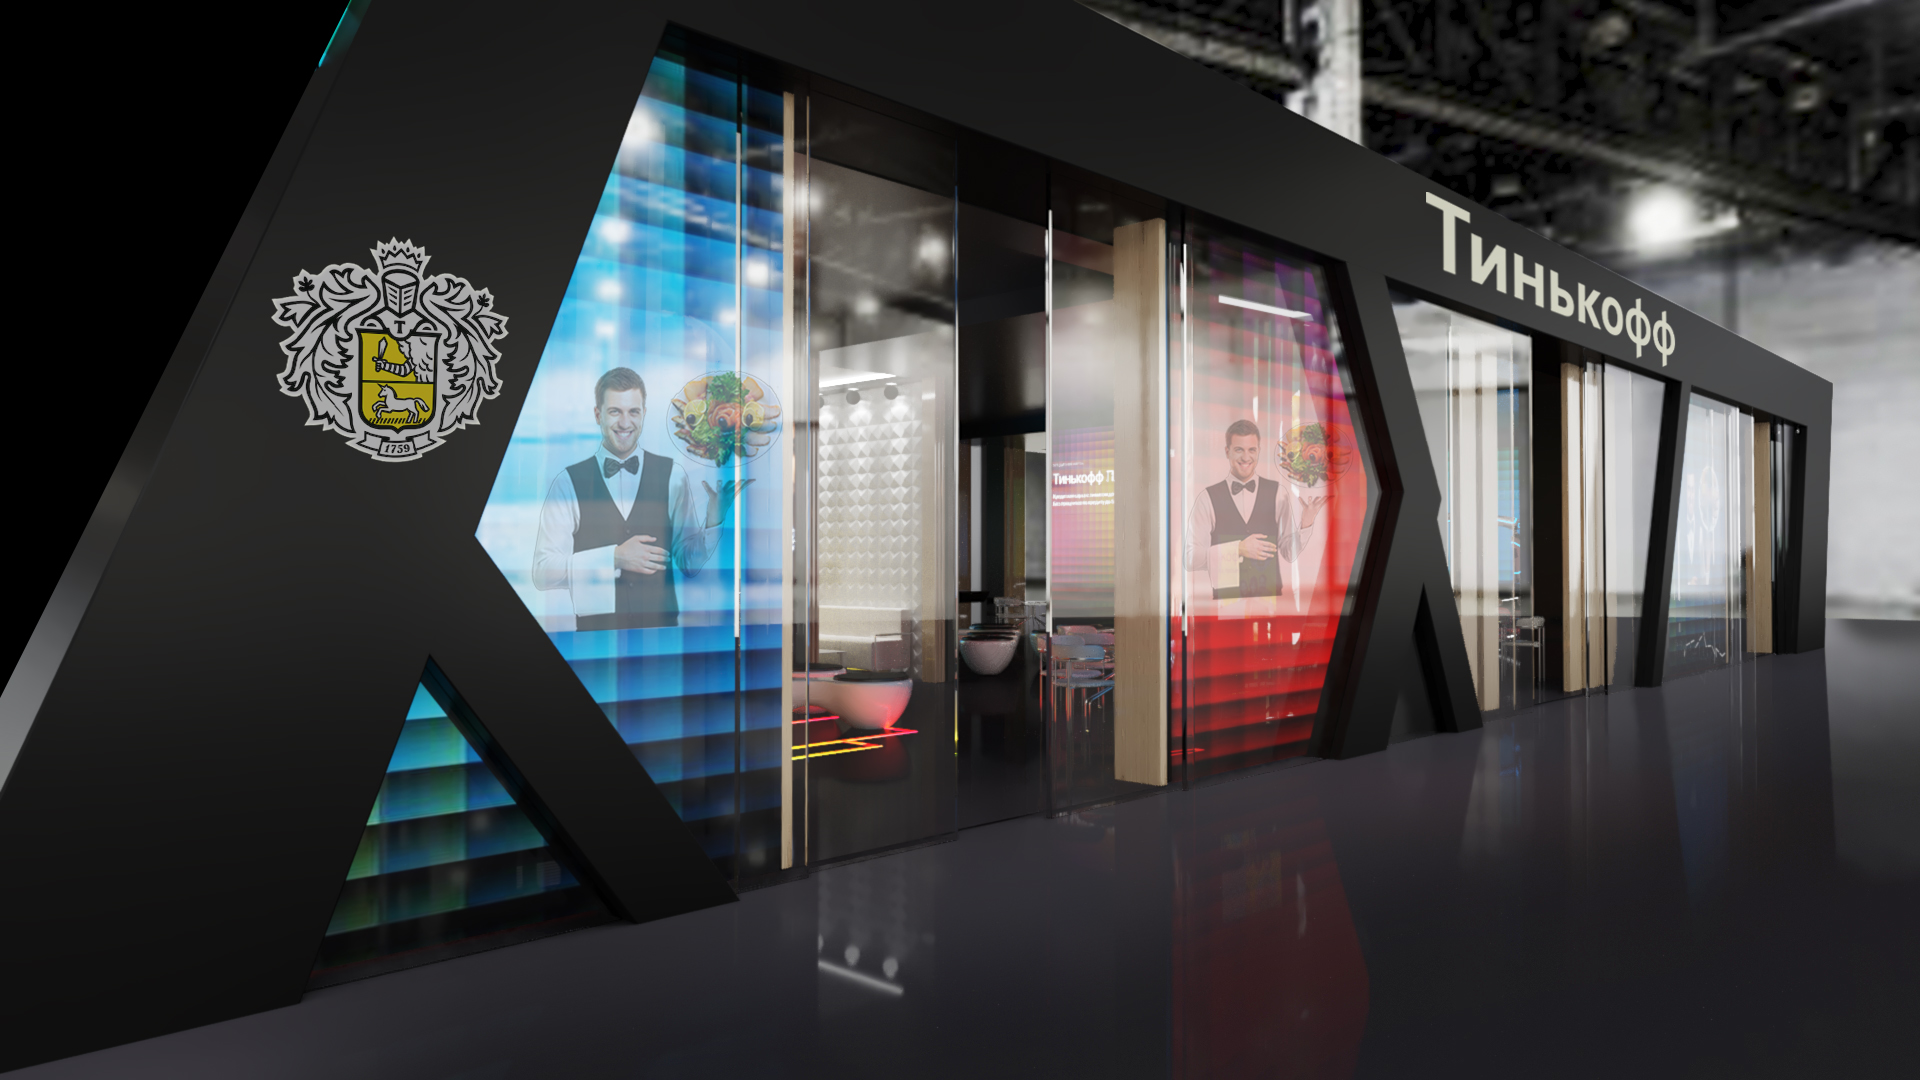 Tinkoff Restaurant Concept dans 3d max corona render image